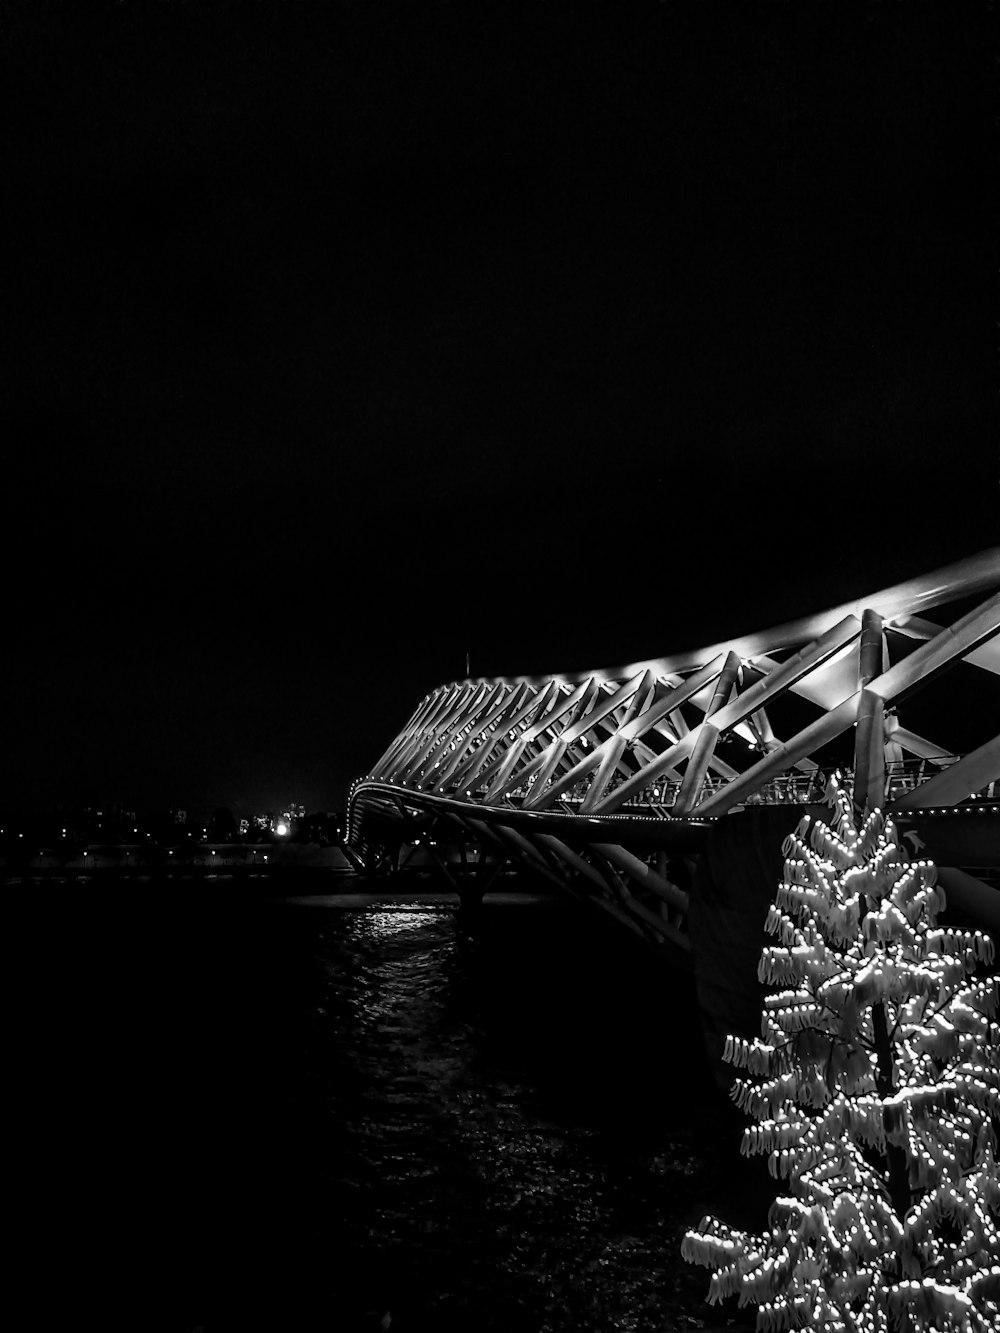 a lit up christmas tree next to a bridge